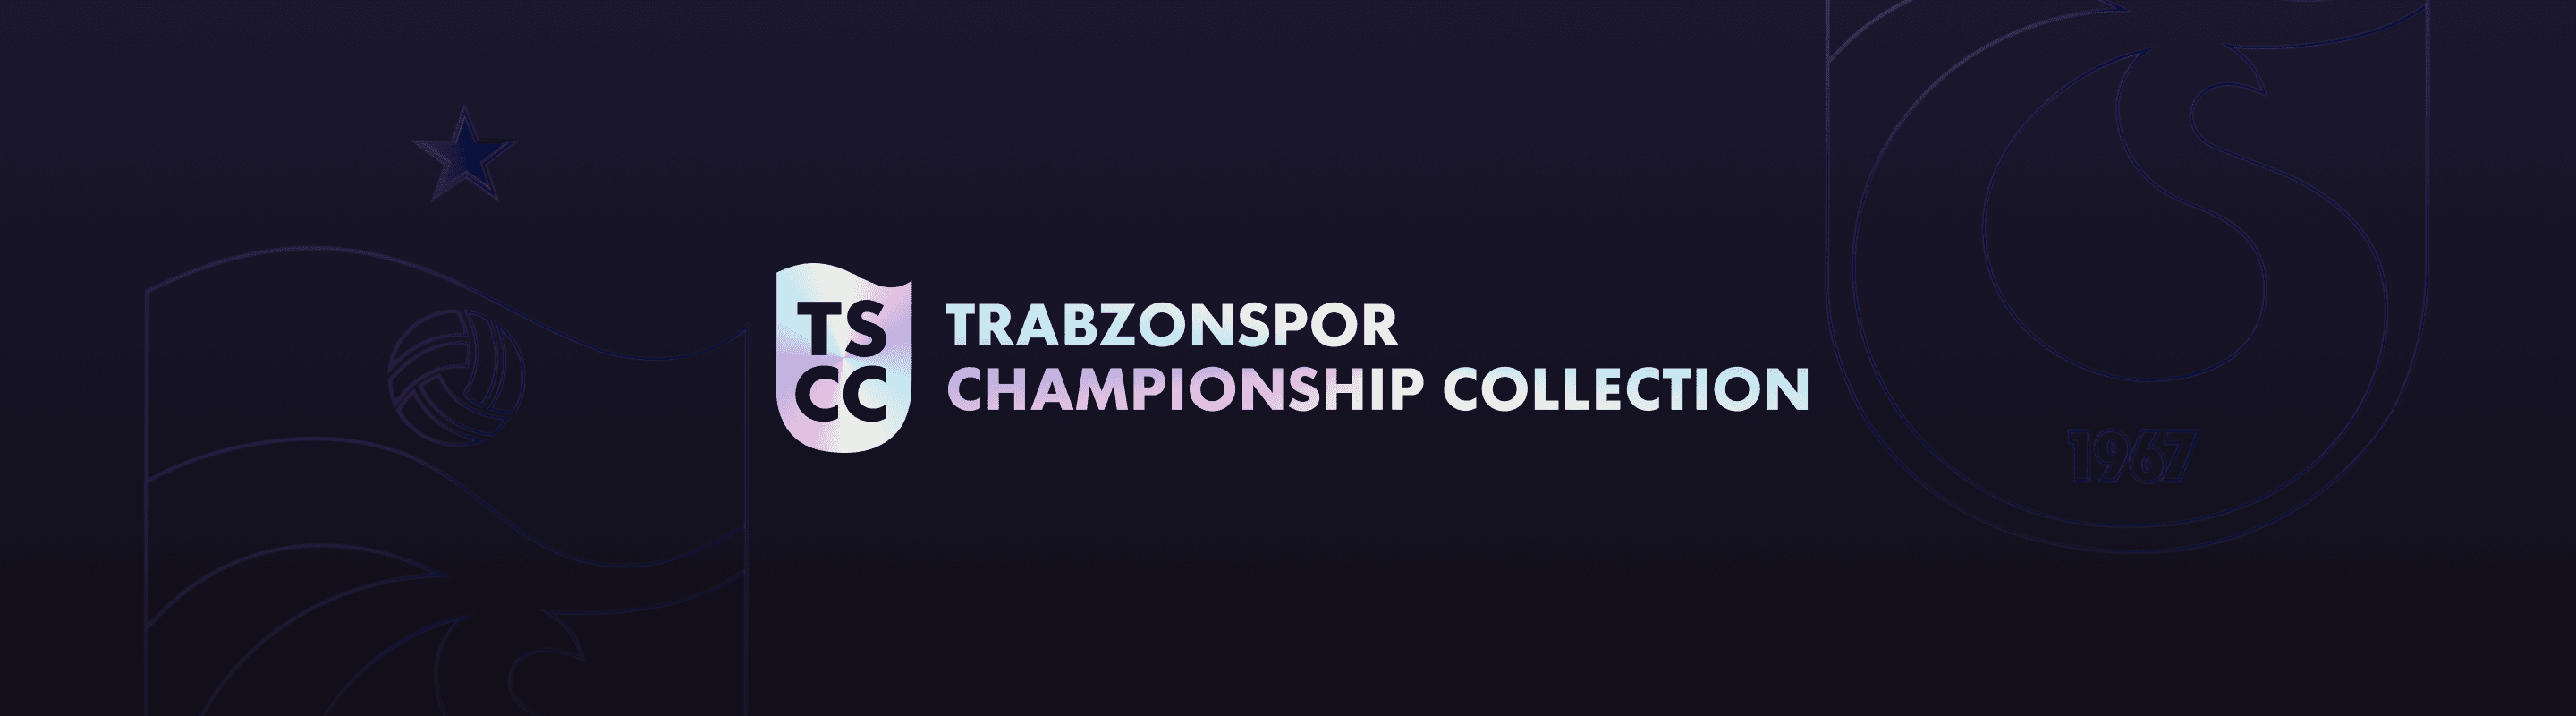 Trabzonspor Championship Collection - 2021-22 season Squad